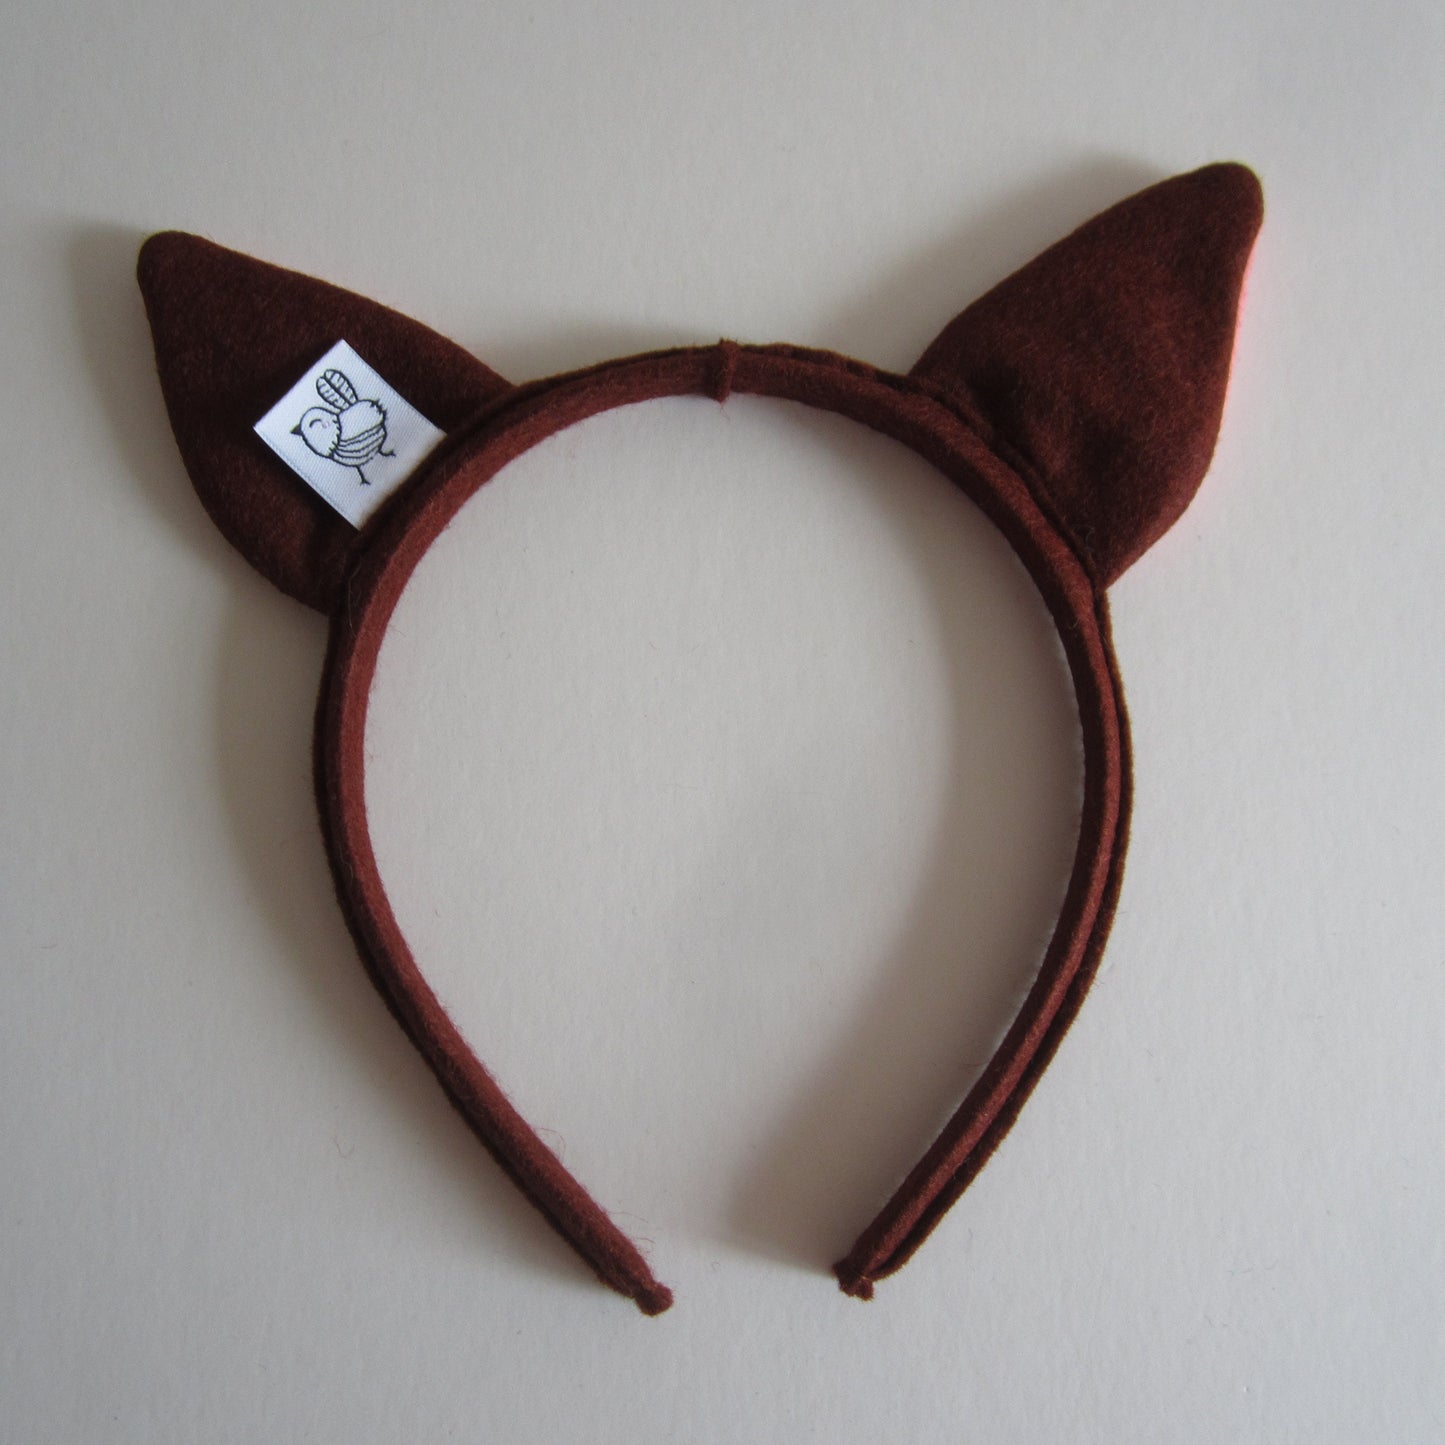 Cat Eared Hairband Made of Chocolate Brown Felt